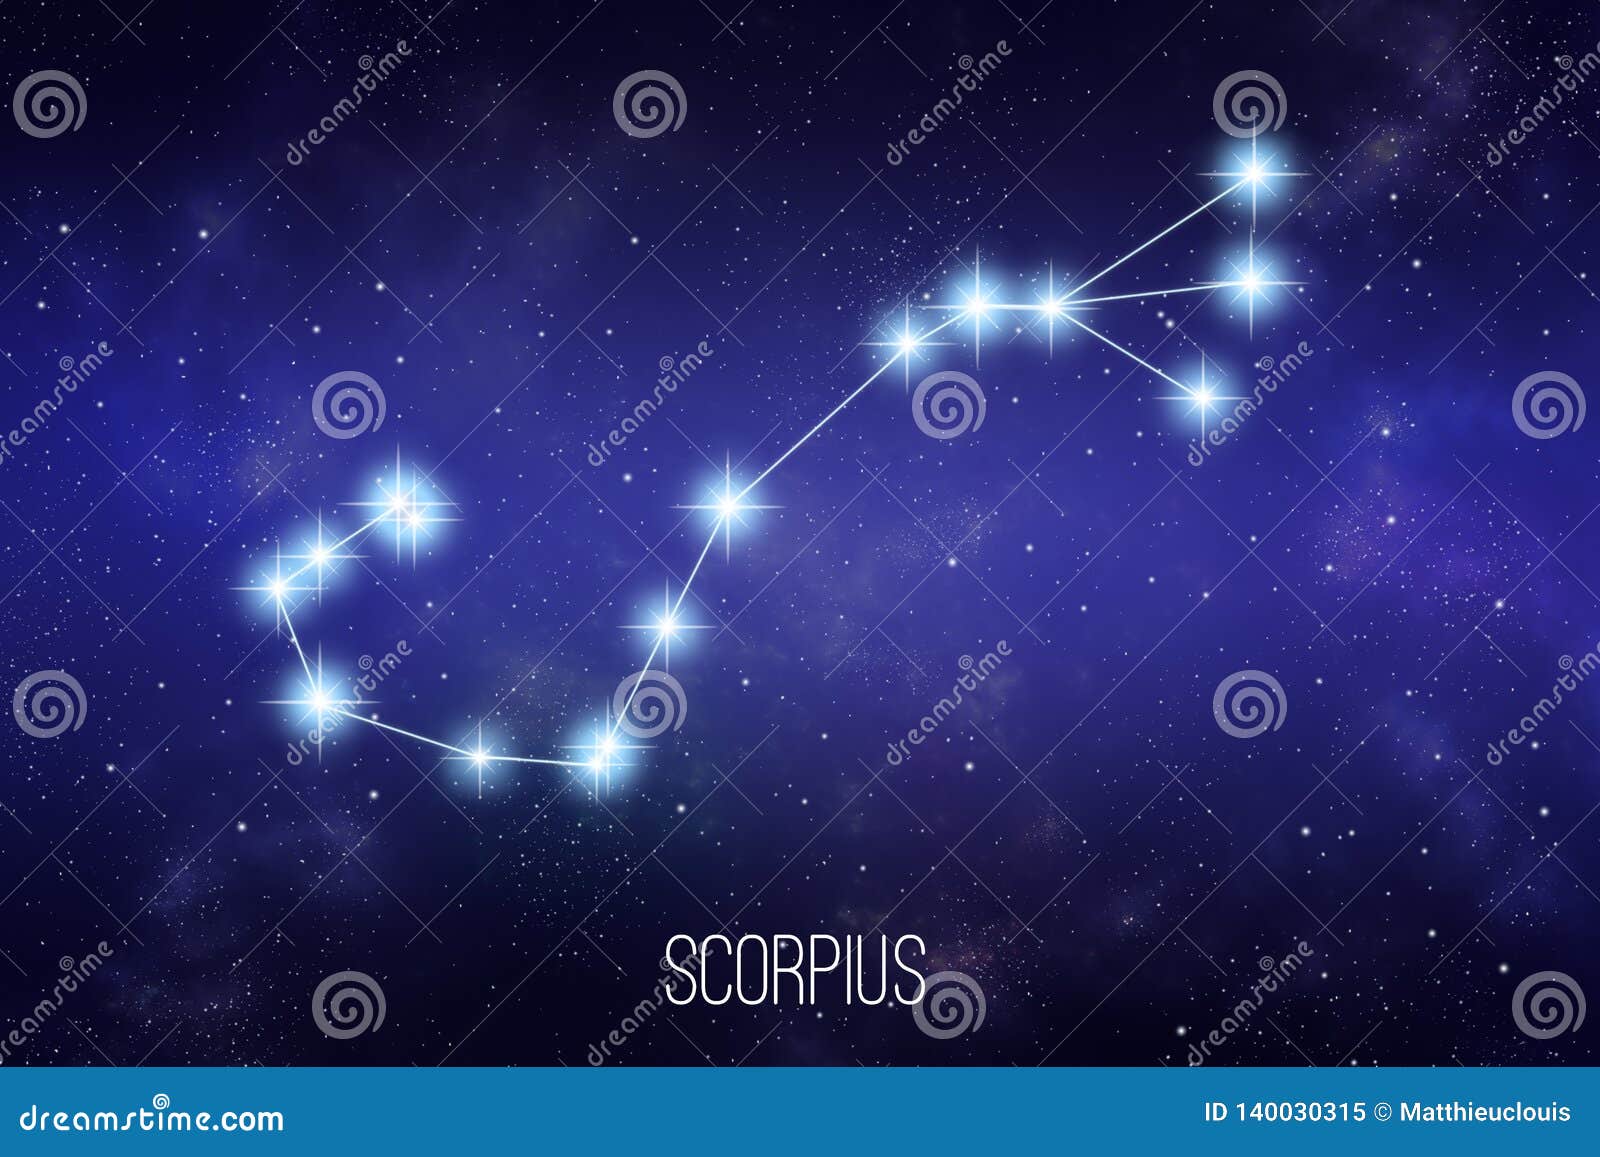 scorpius zodiac constellation 